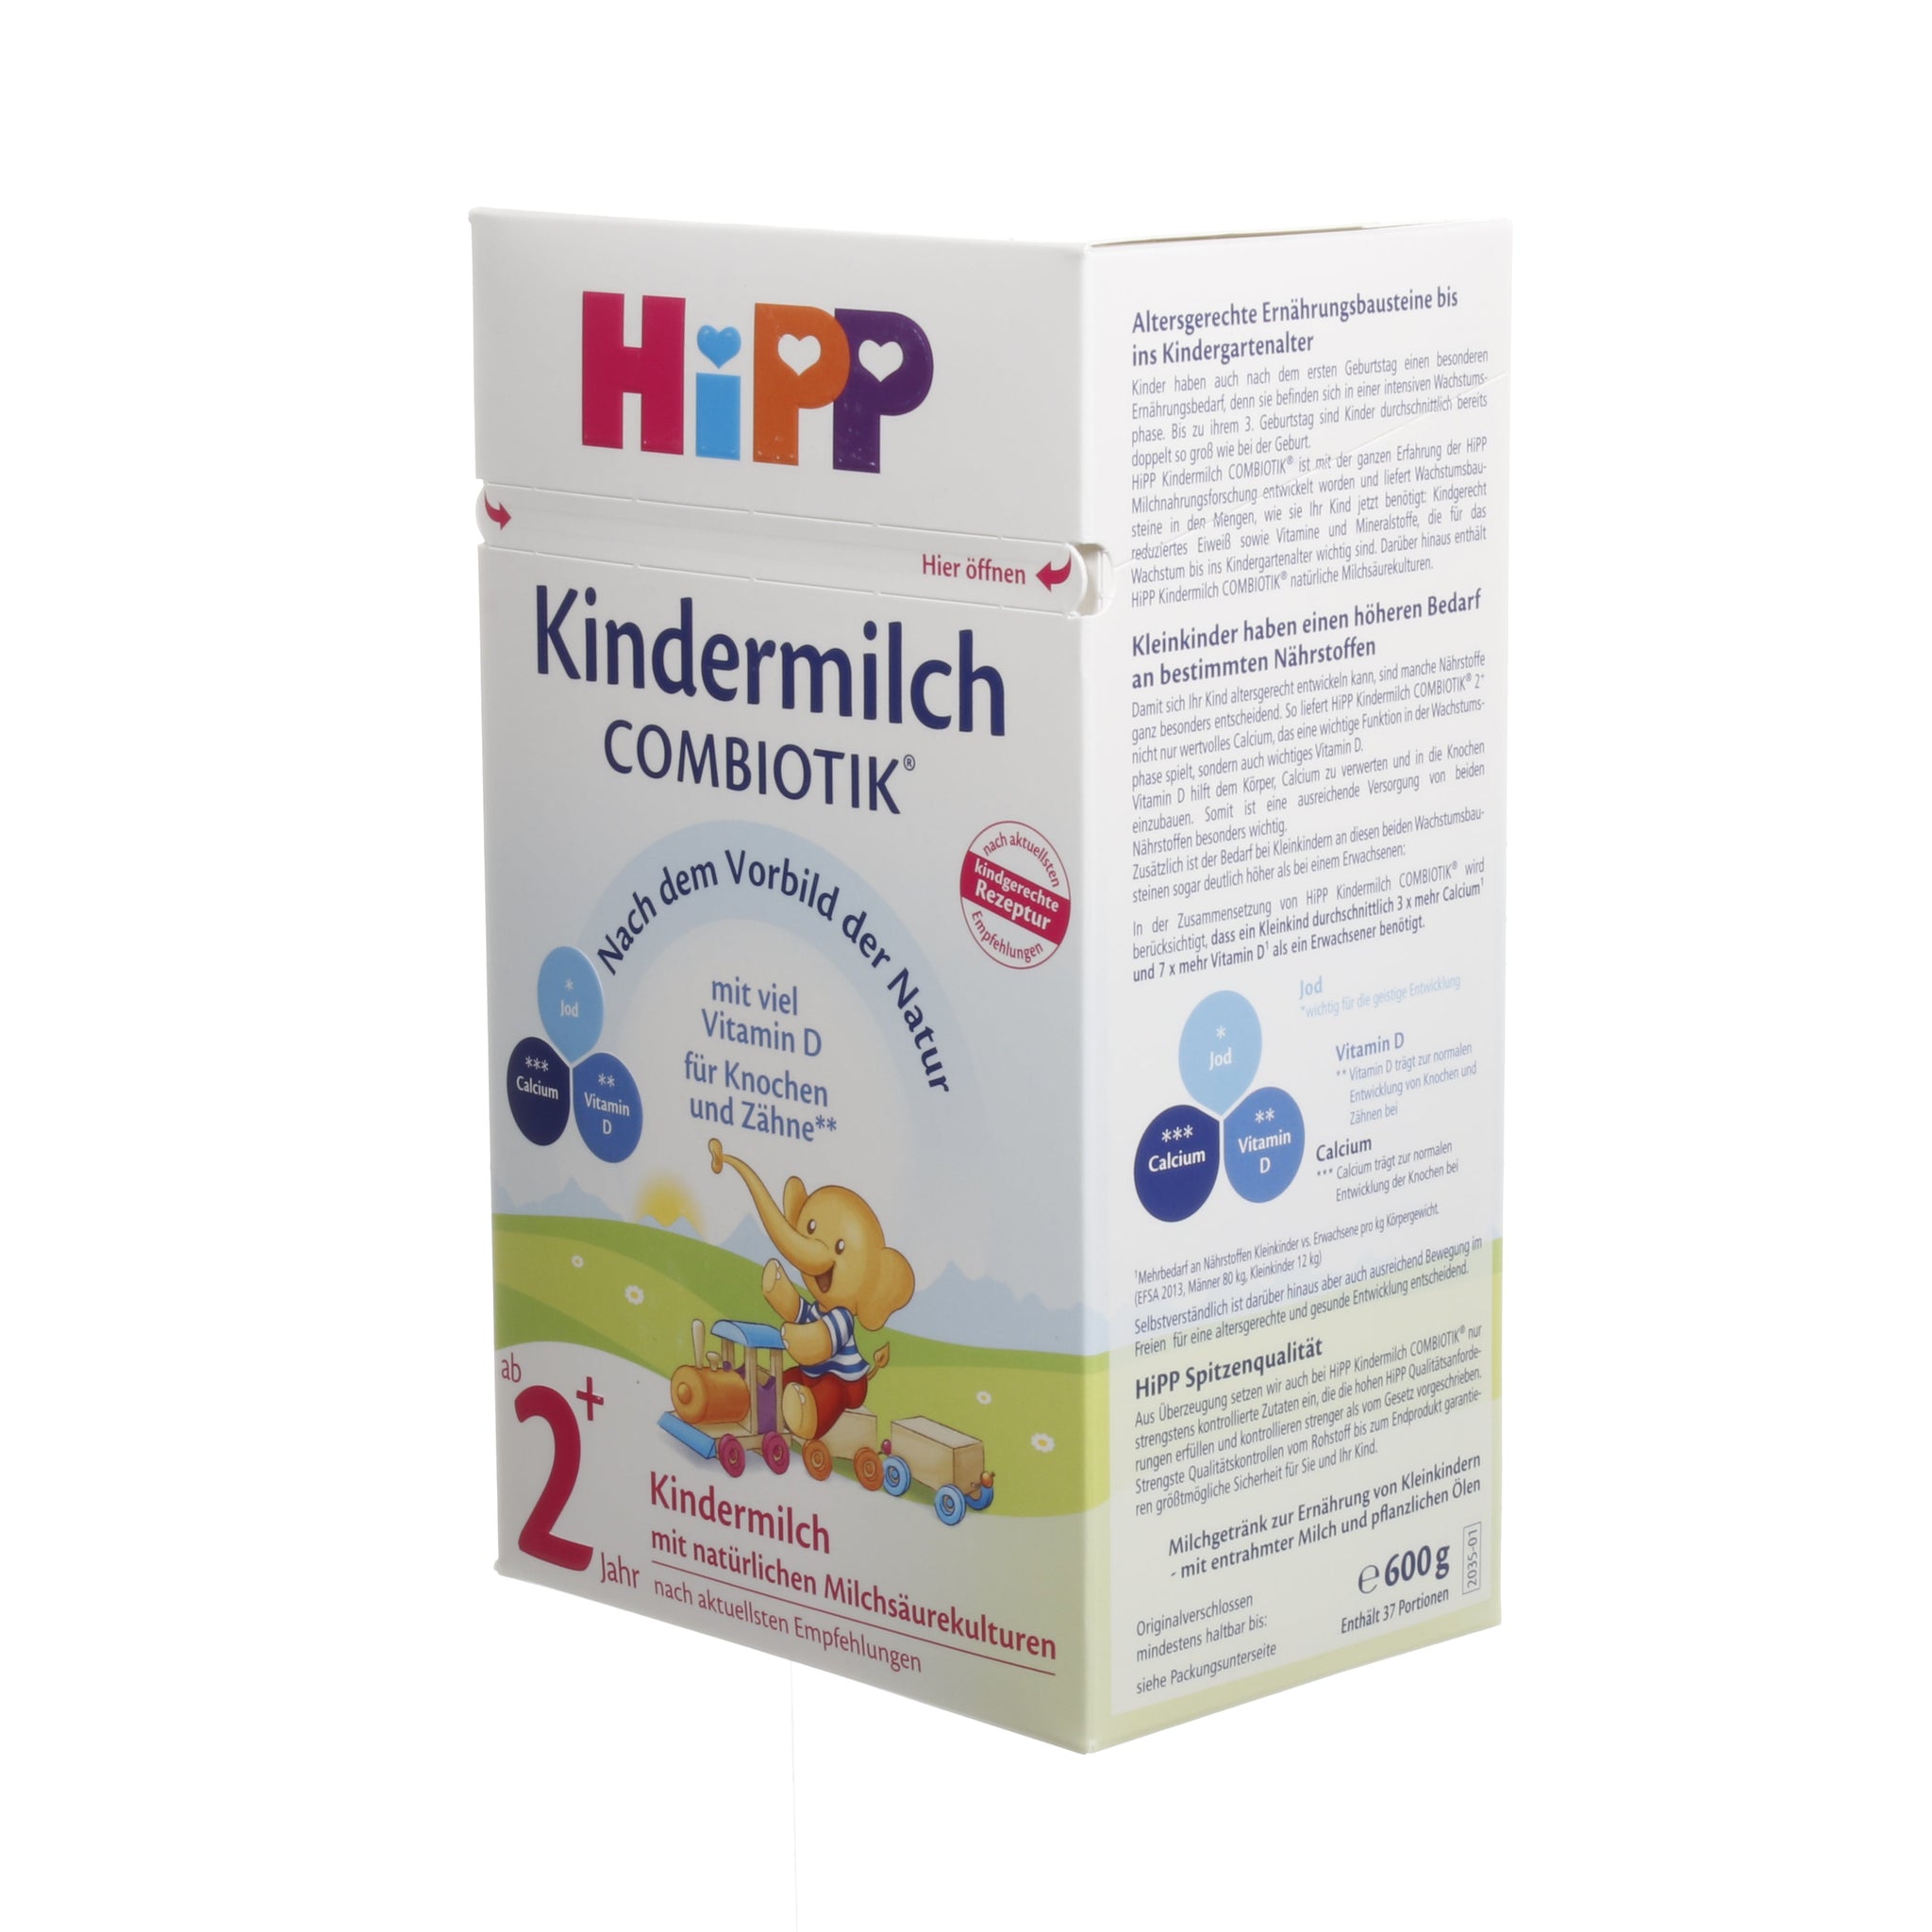 32 x Hipp Children's Milk Combiotics 2+, 600g - firstorganicbaby